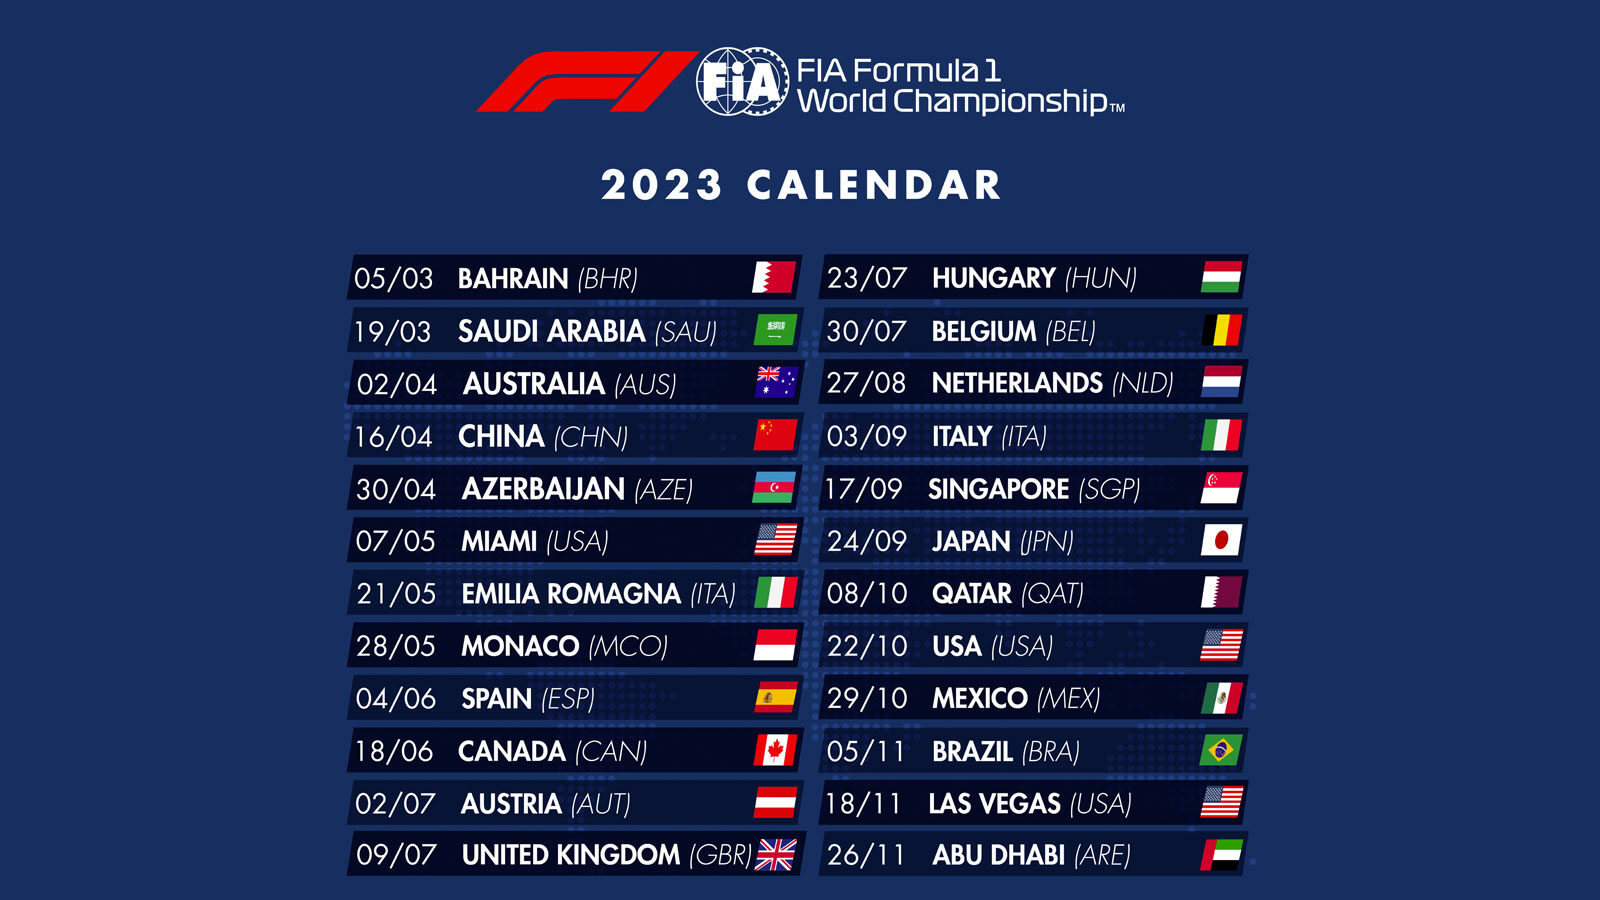 Formel-1: Formel-1 Kalender 2023 bekannt gegeben